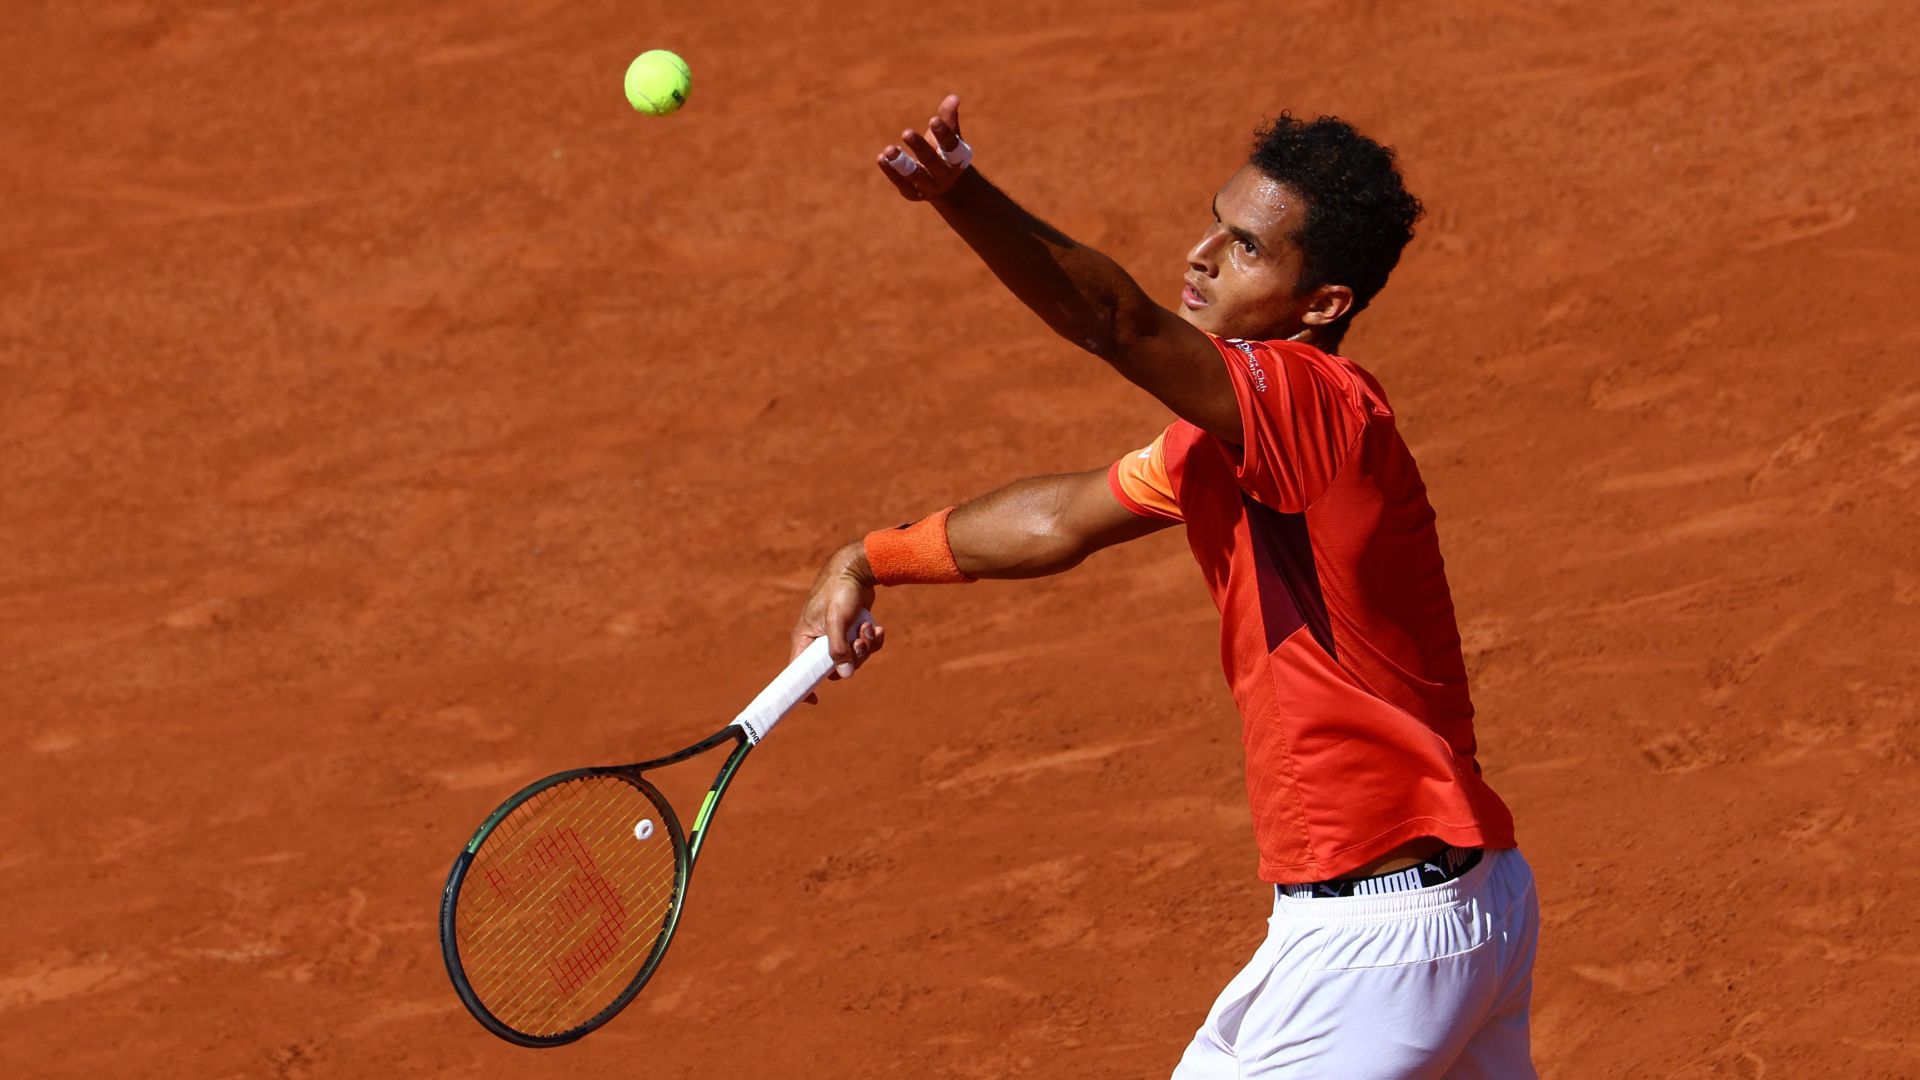 Juan Pablo Varillas vs Novak Djokovic EN VIVO ESPN: juegan el primer set de cuarta ronda de Ronald Garros 2023